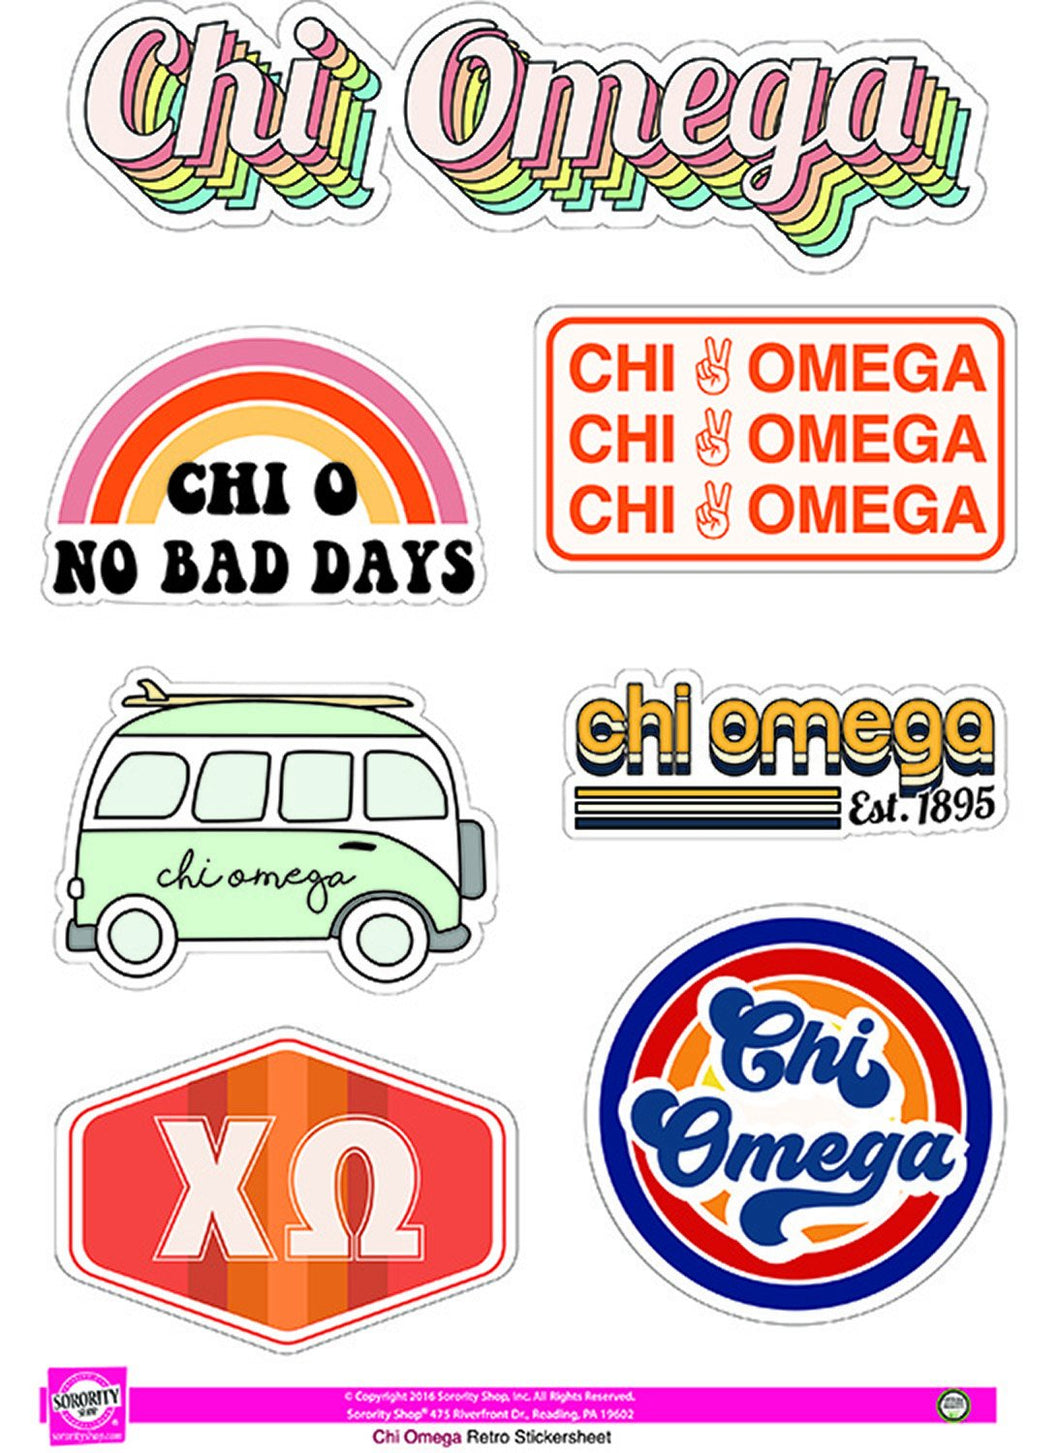 Retro Sticker Sheet - Chi Omega